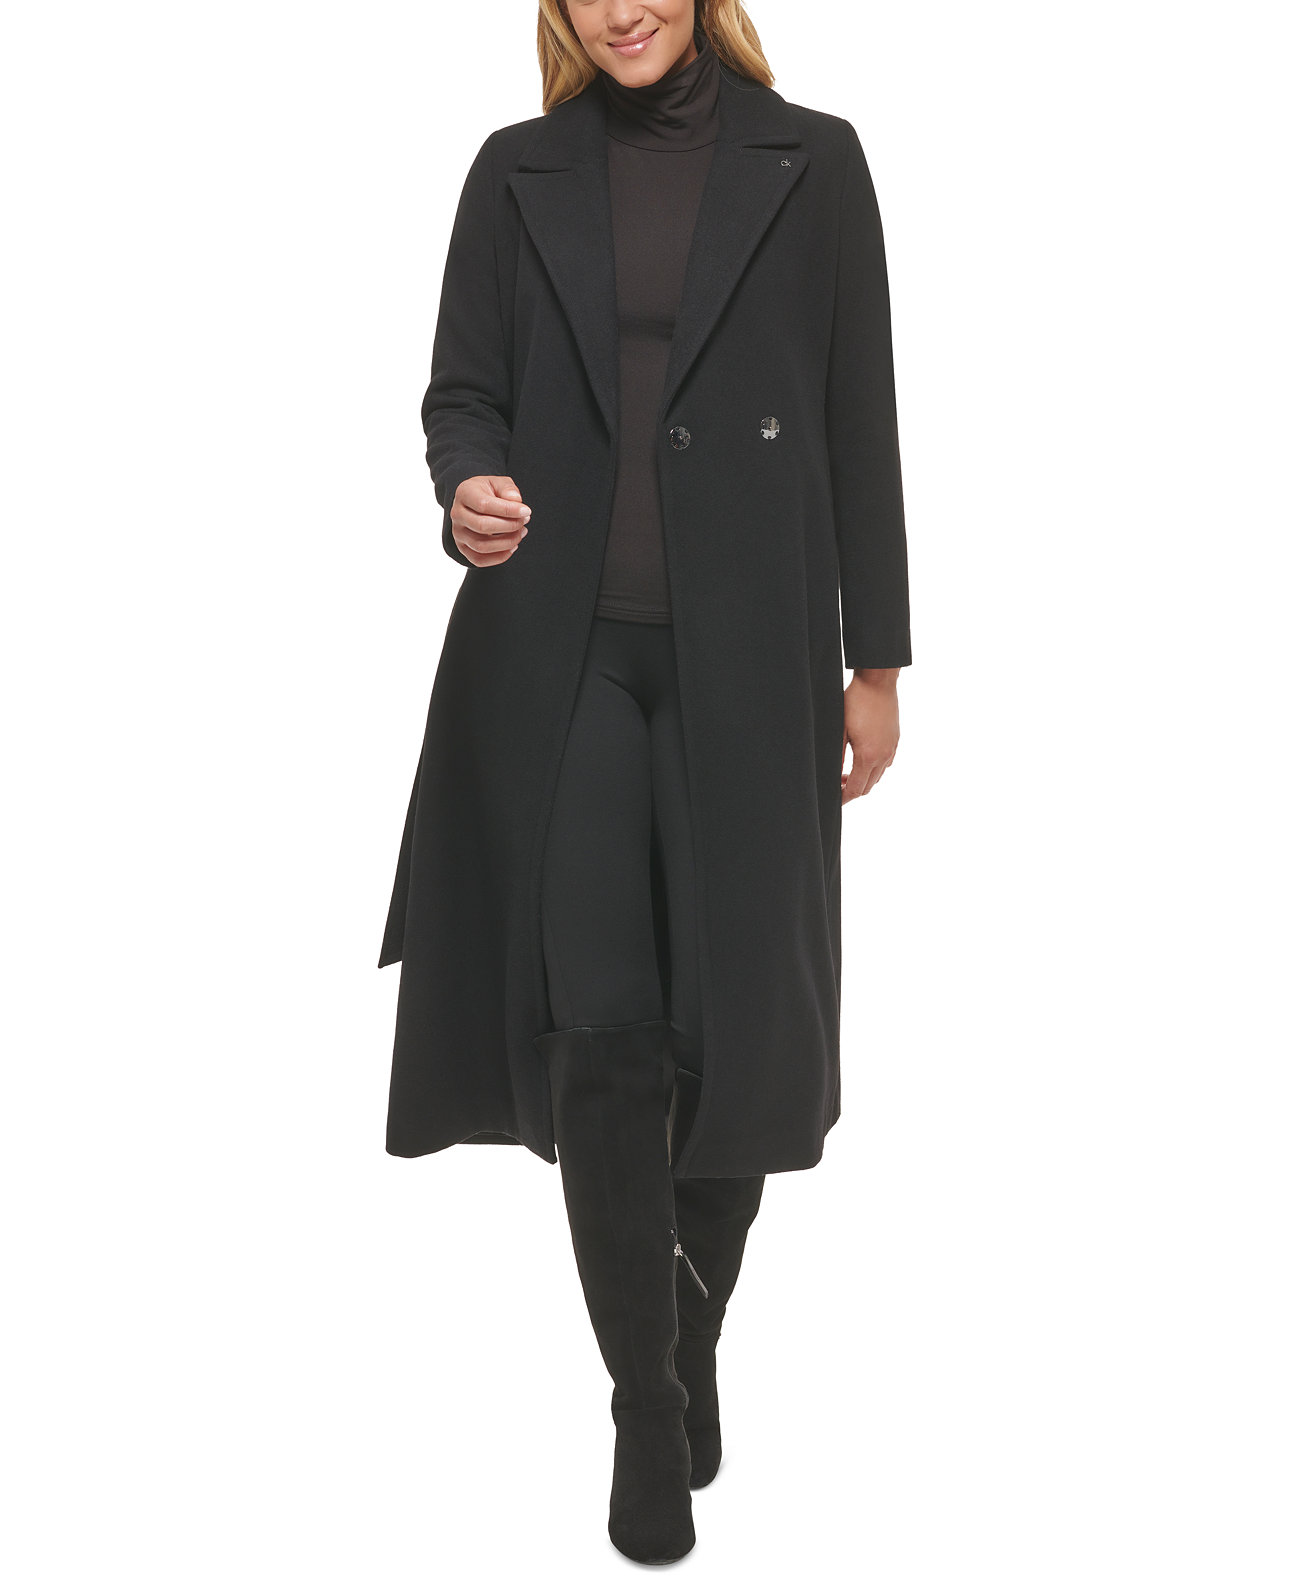 Женское Пальто на Завязках Calvin Klein из Шерсти Calvin Klein